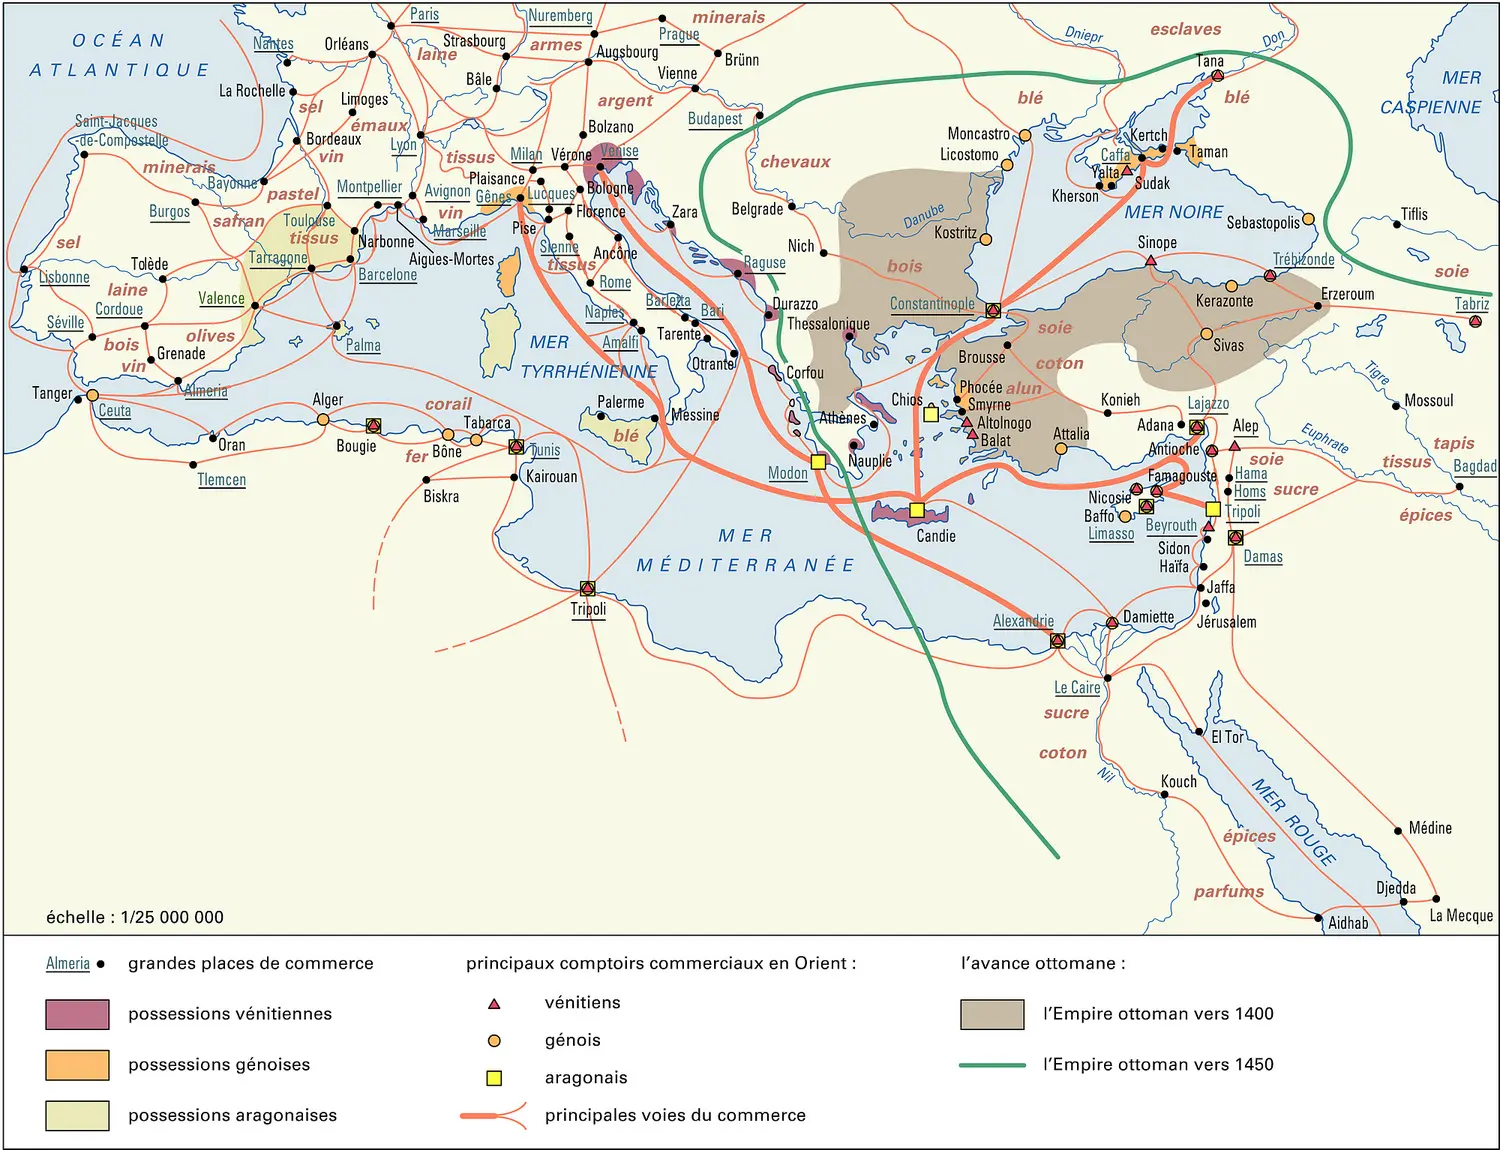 Méditerranée, commerce médiéval